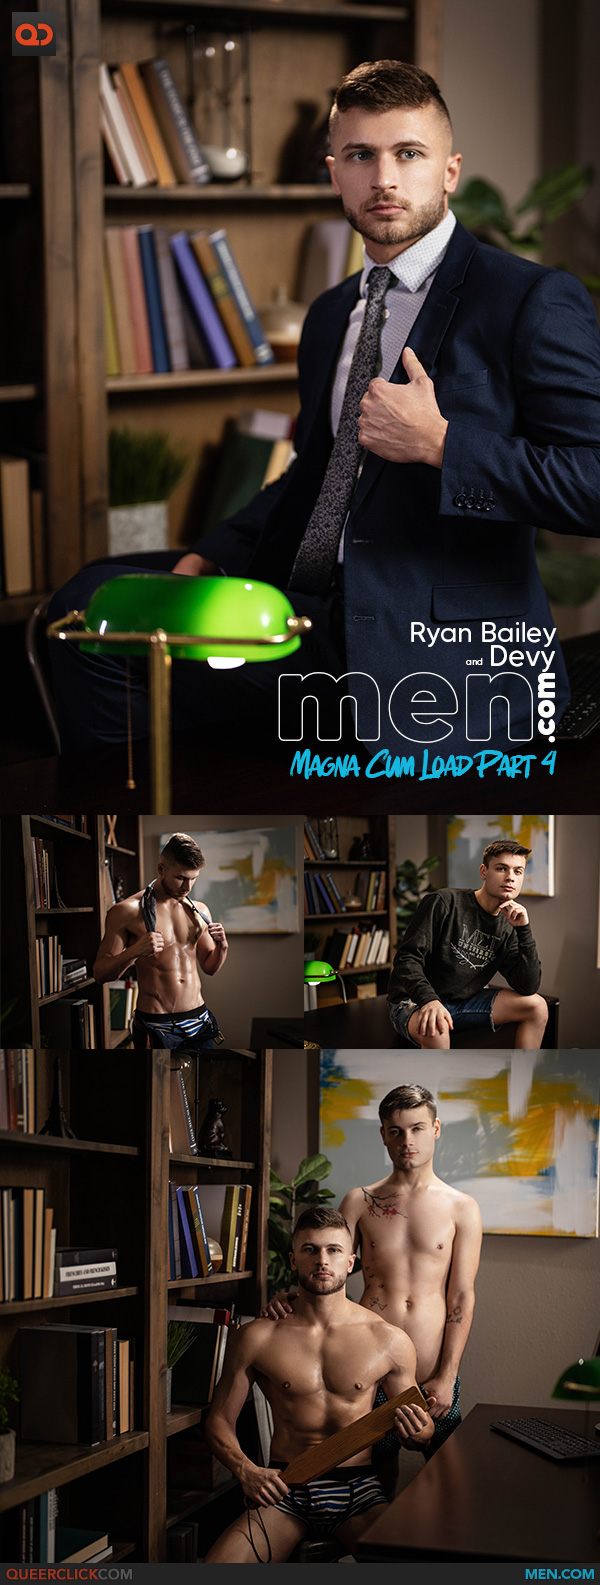 Men.com: Ryan Bailey and Devy - Magna Cum Load Part 4